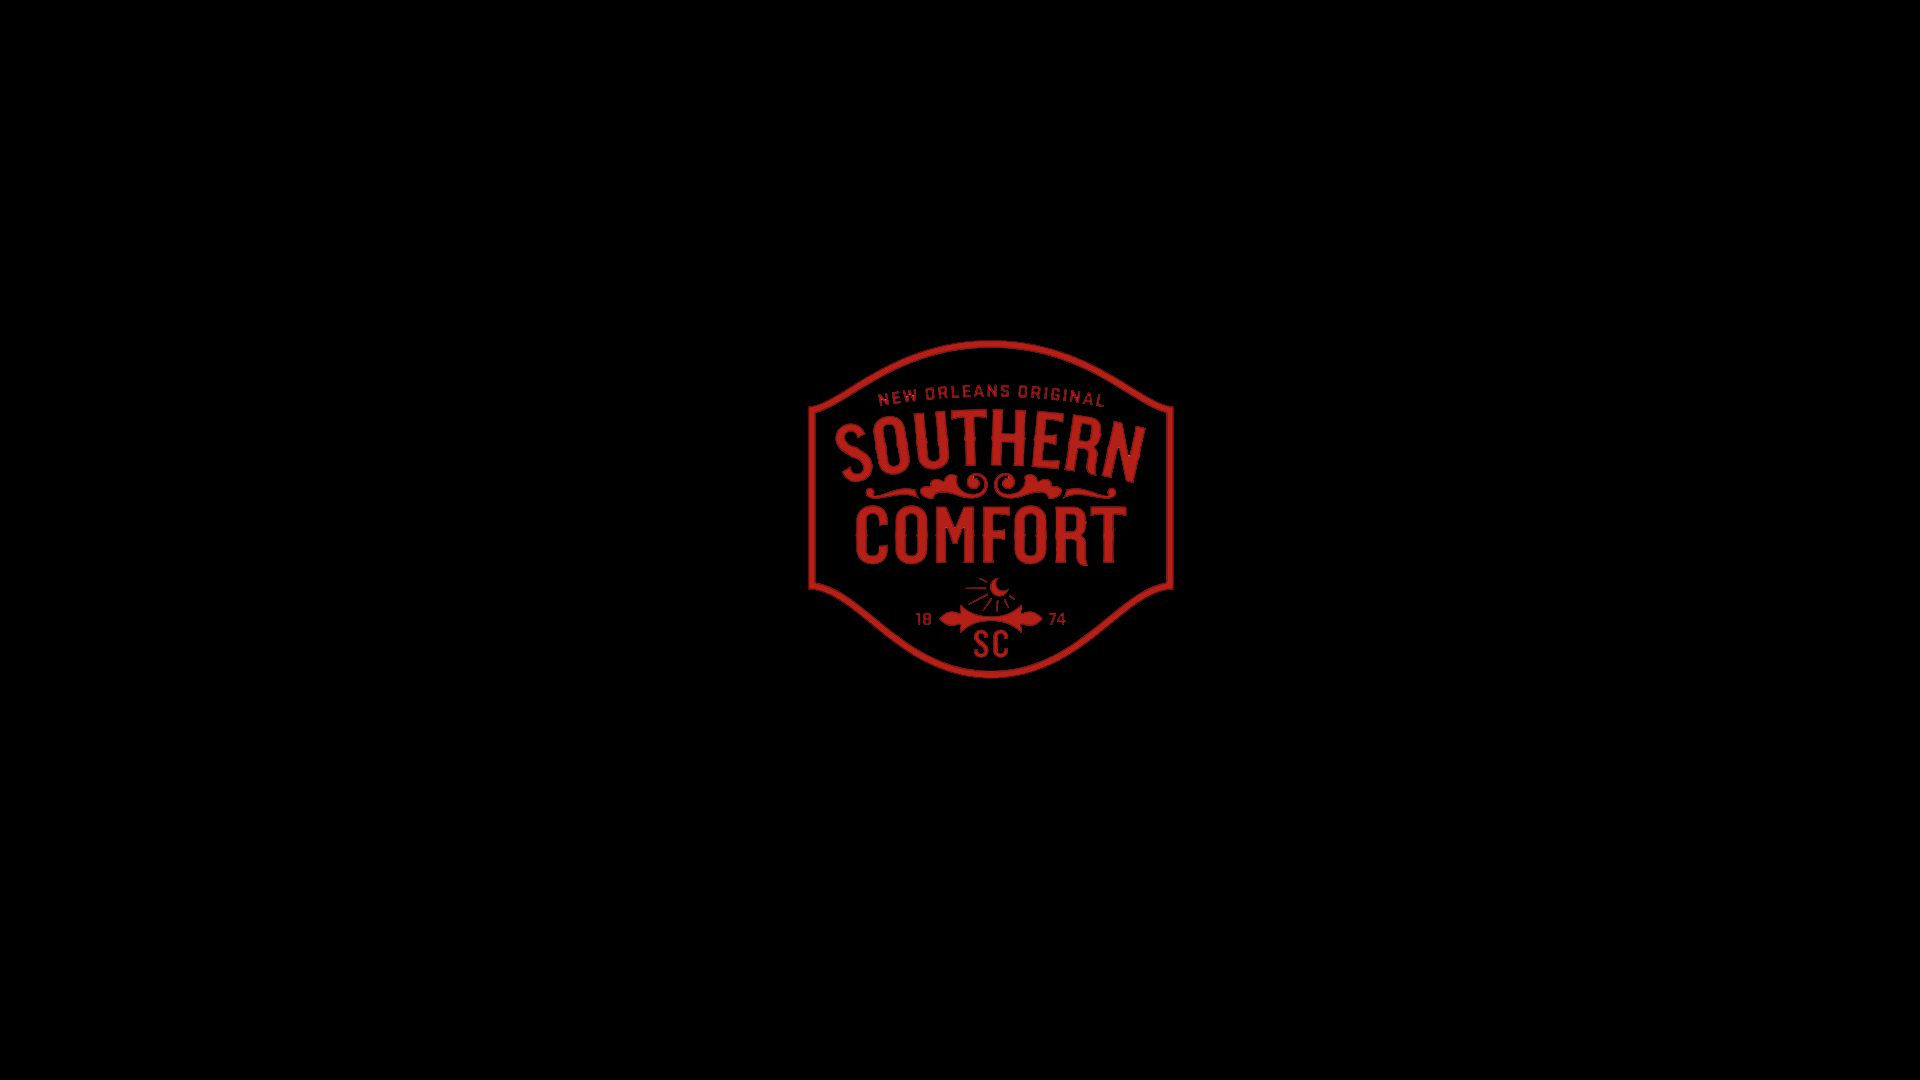 Southern Comfort Wallpaper. Comfort